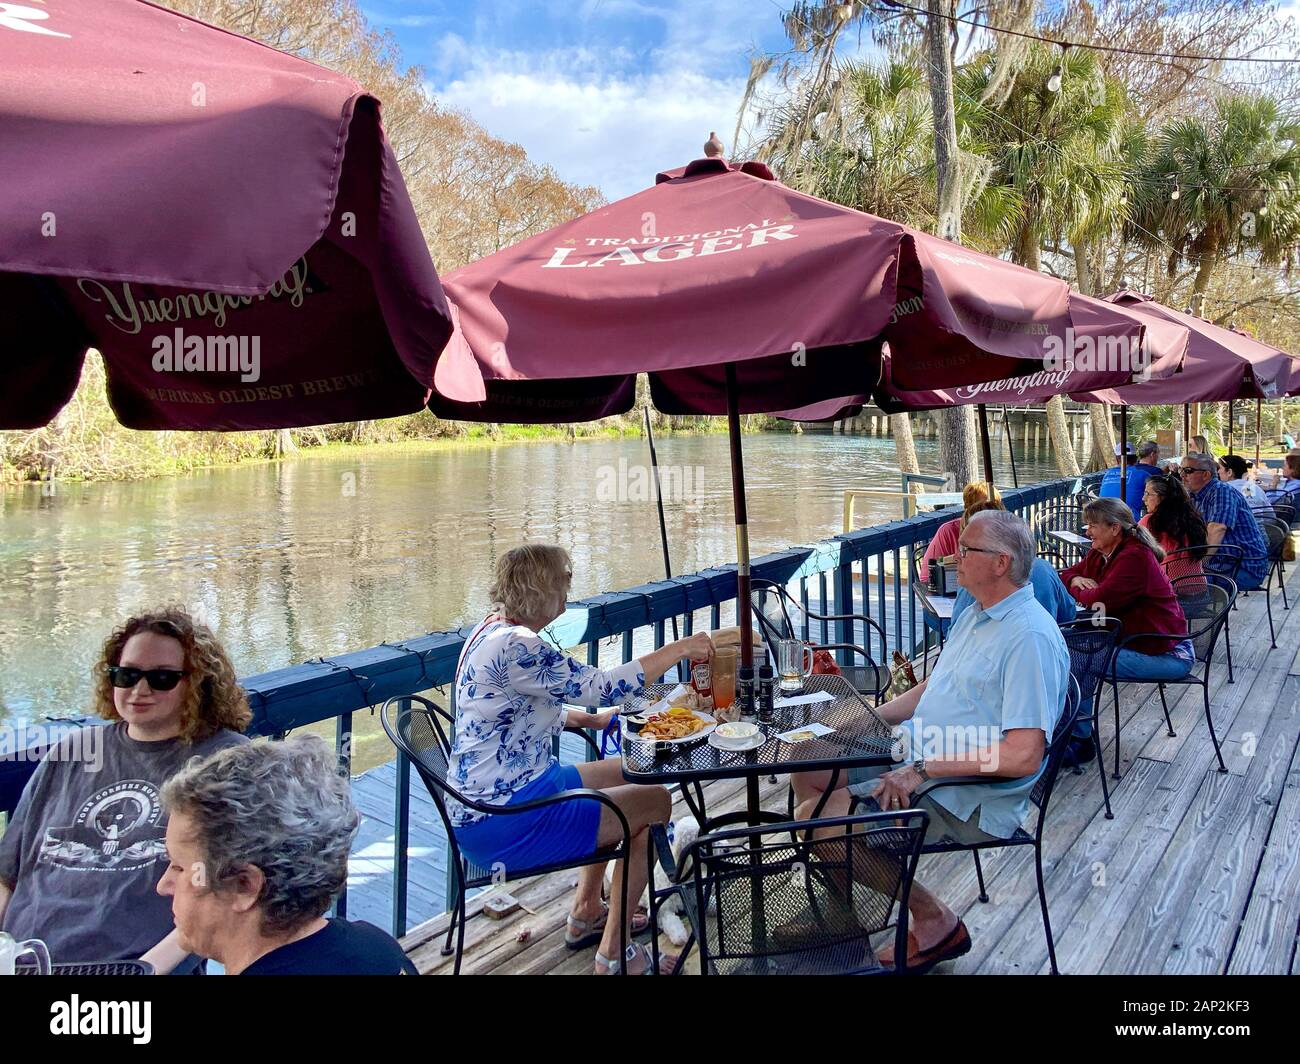 Swampy’s. Dunnellon, Florida. Stock Photo